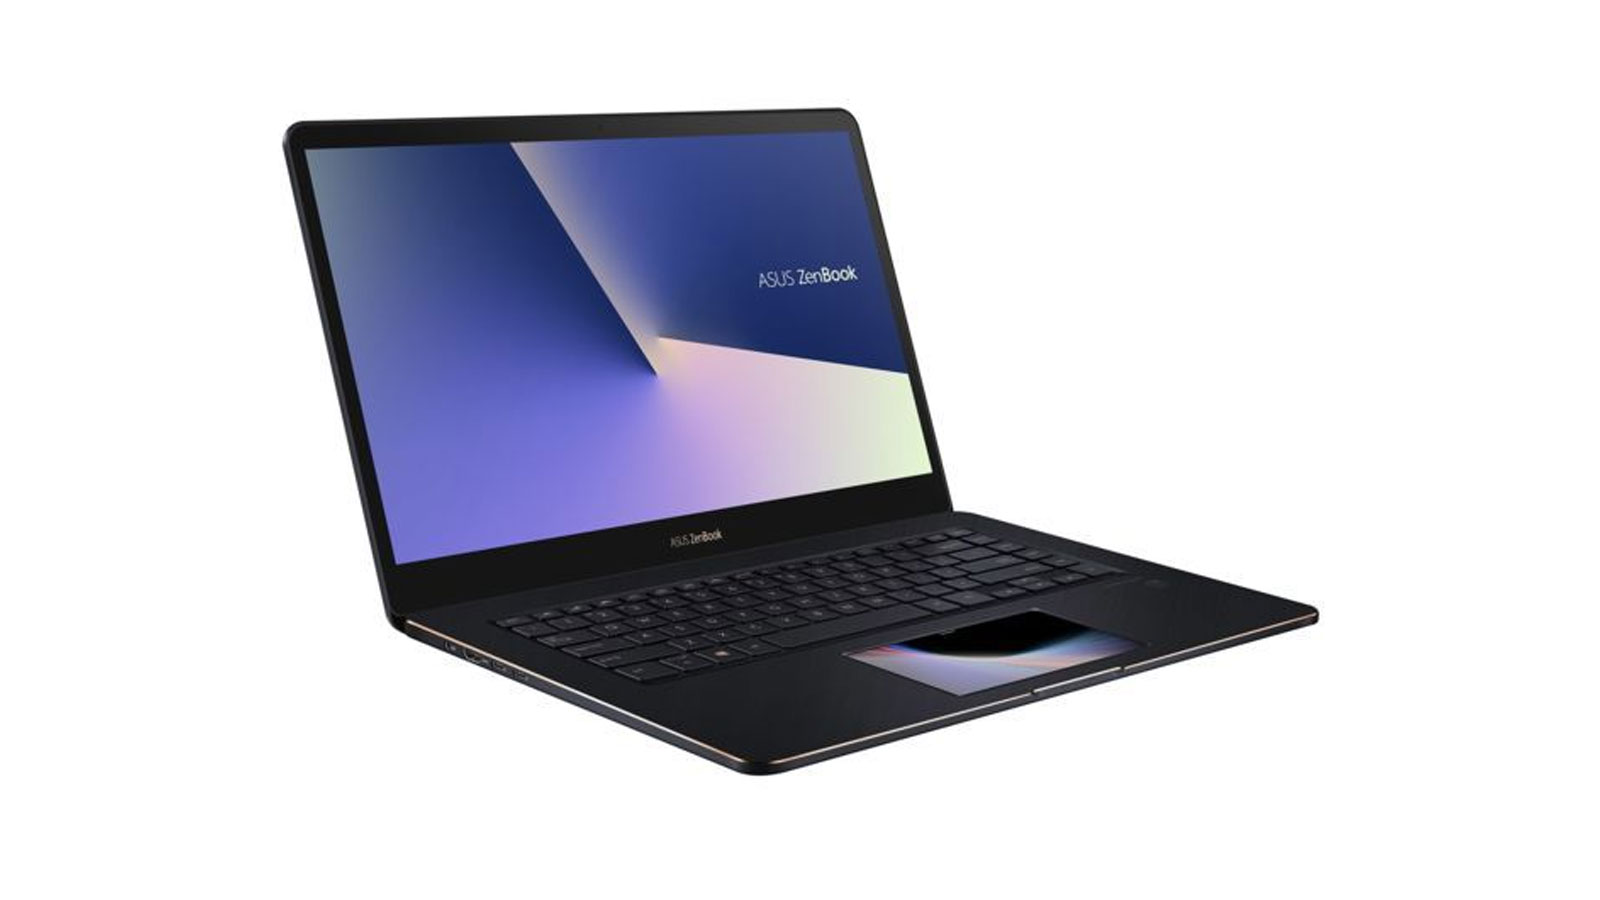 Asus ZenBook Pro 15 UX580